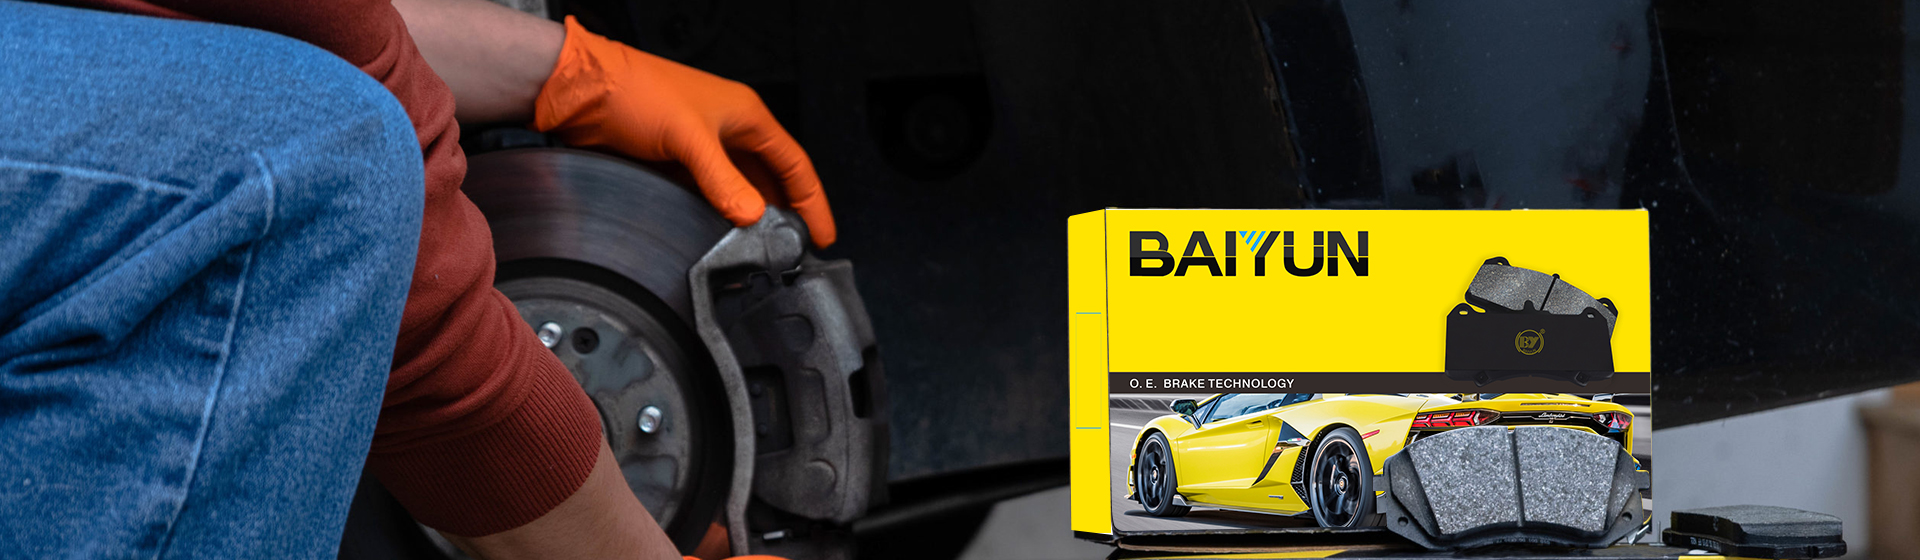 baiyun-brake-pads-linings-products-list-banner